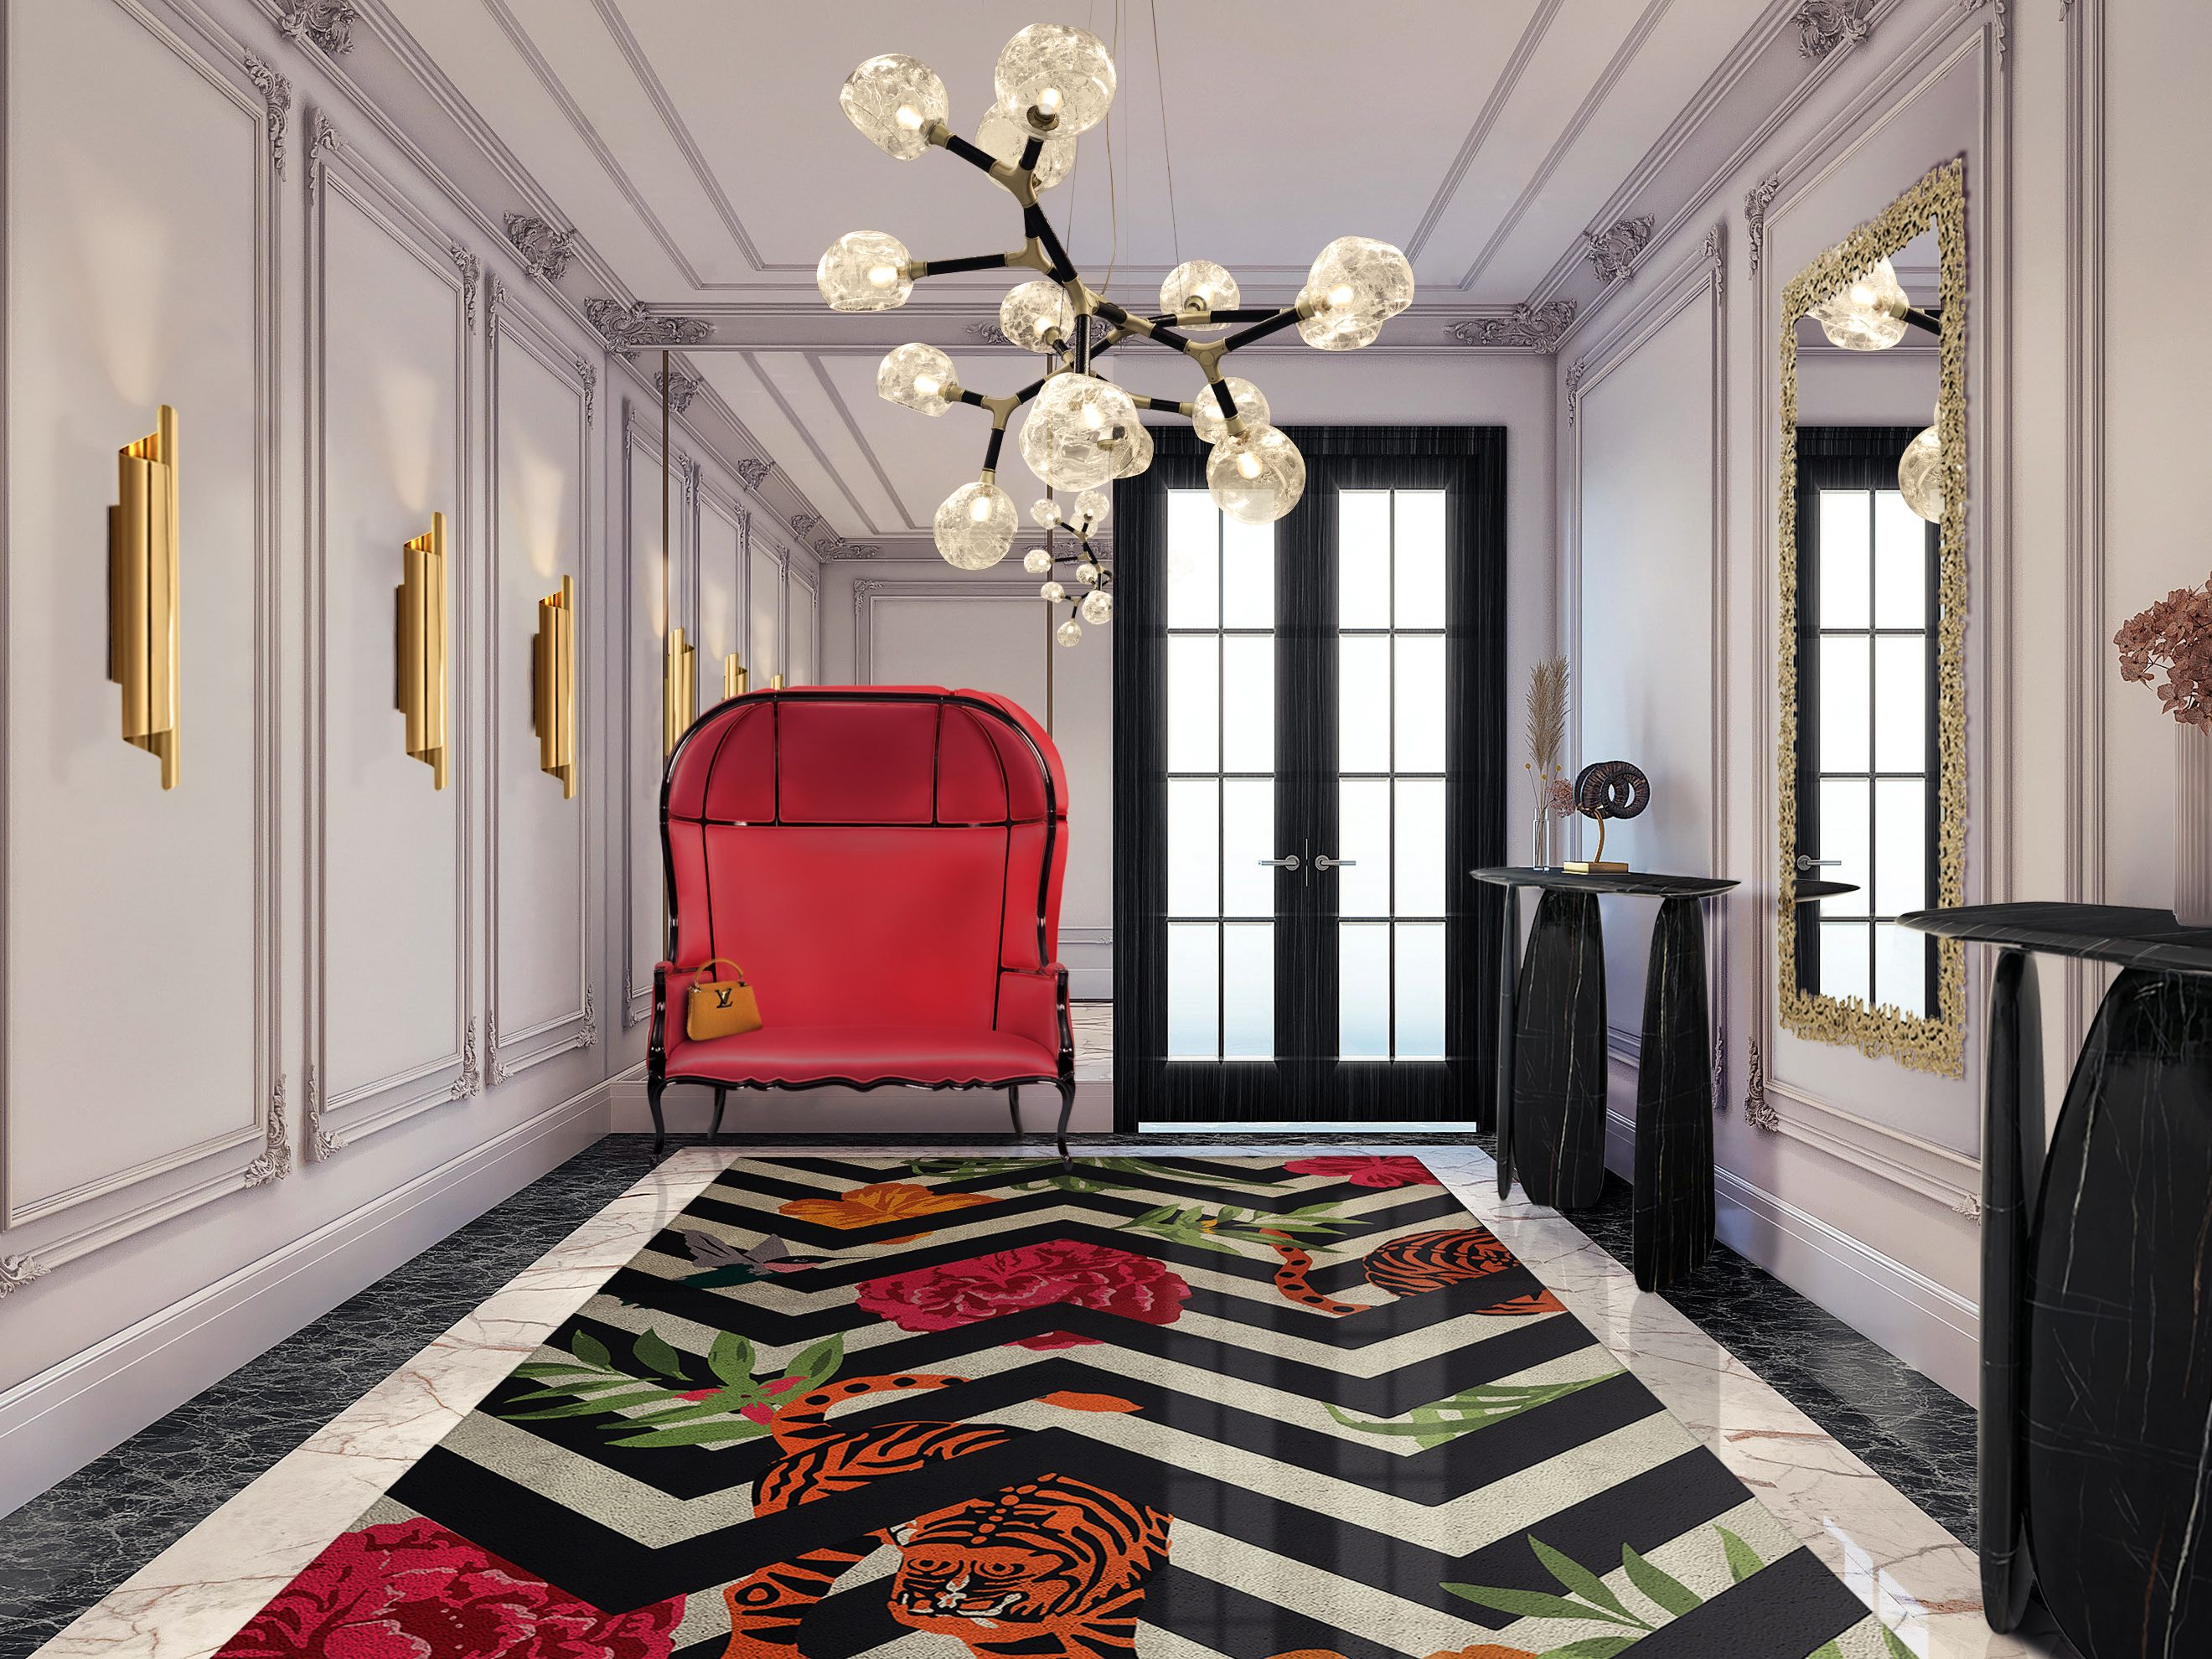 Hotel-Like Hallway Design with the Astonishing Savana Rug by Rug'Society